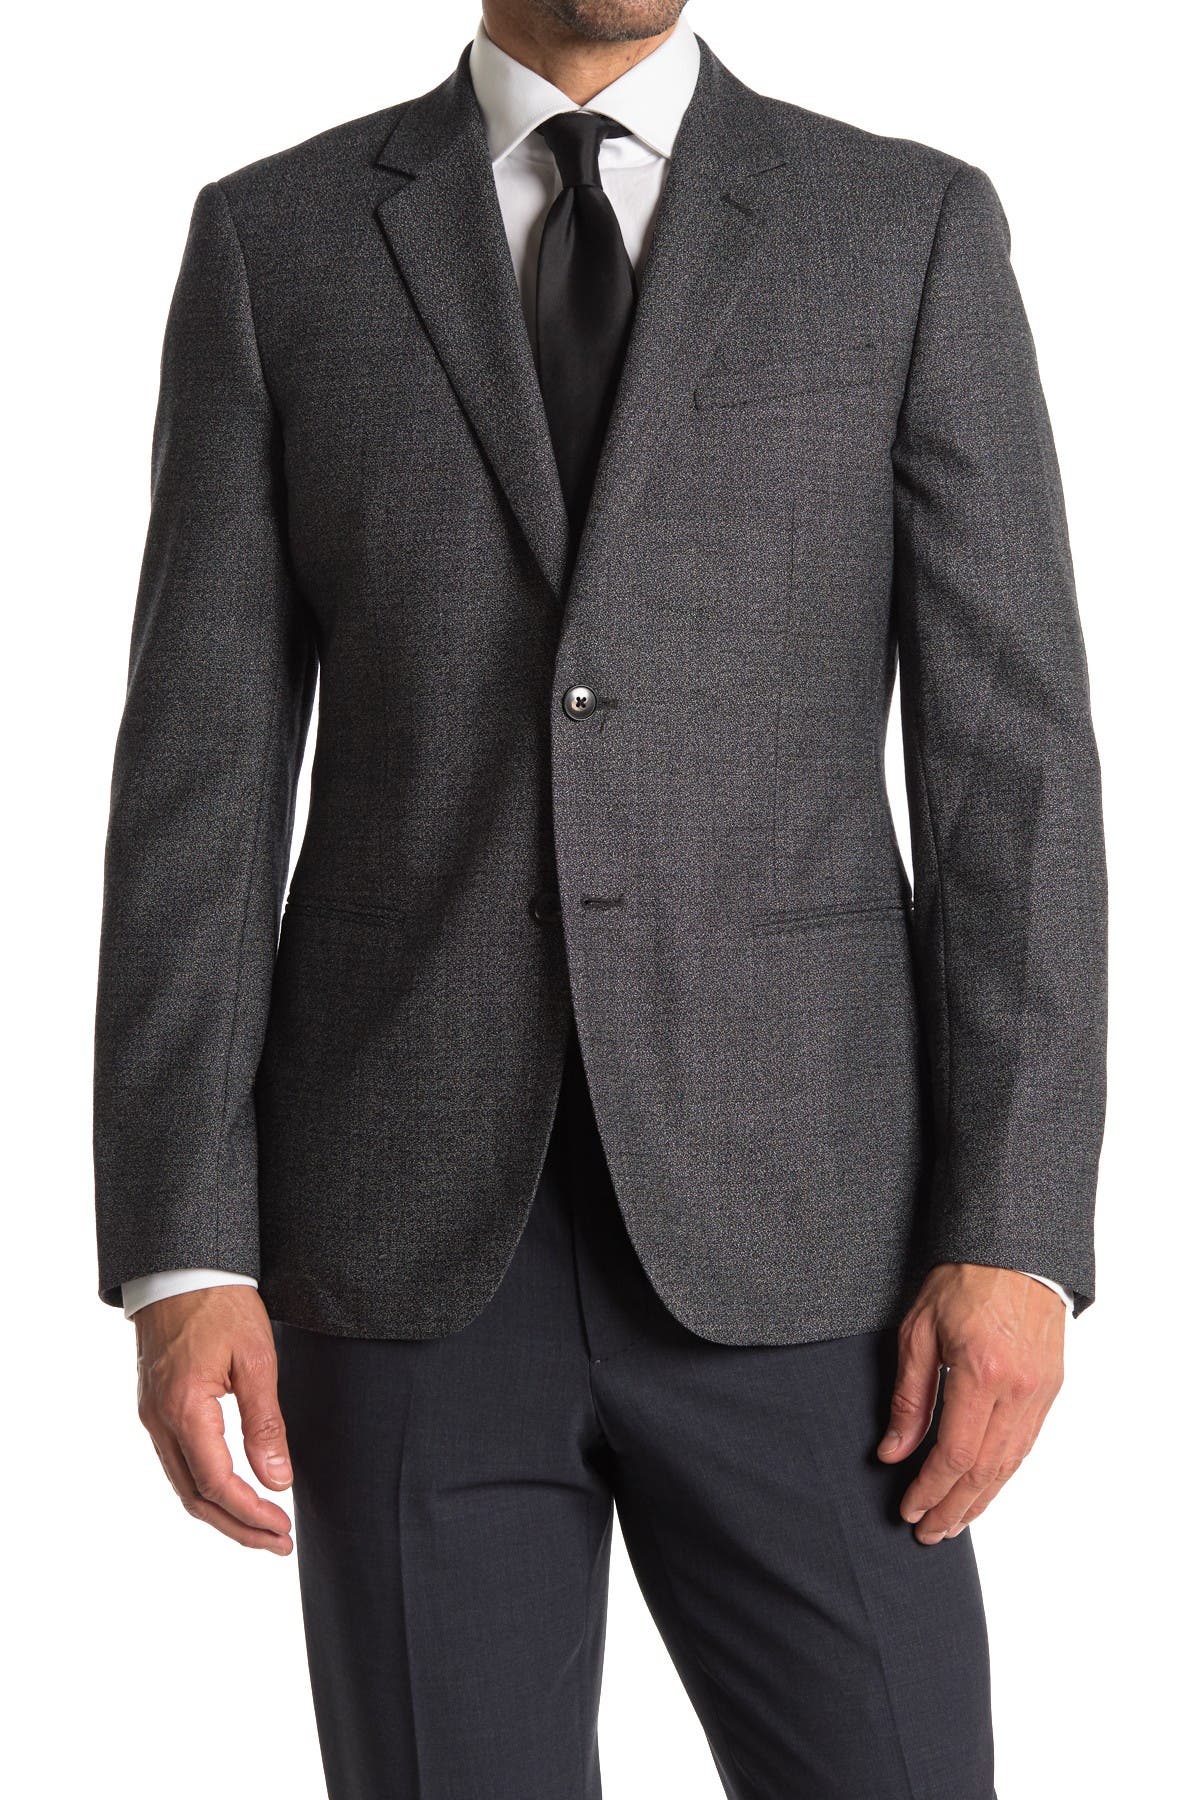 REISS | Charcoal Two Button Notch Lapel Wool Blend Suit Separates ...